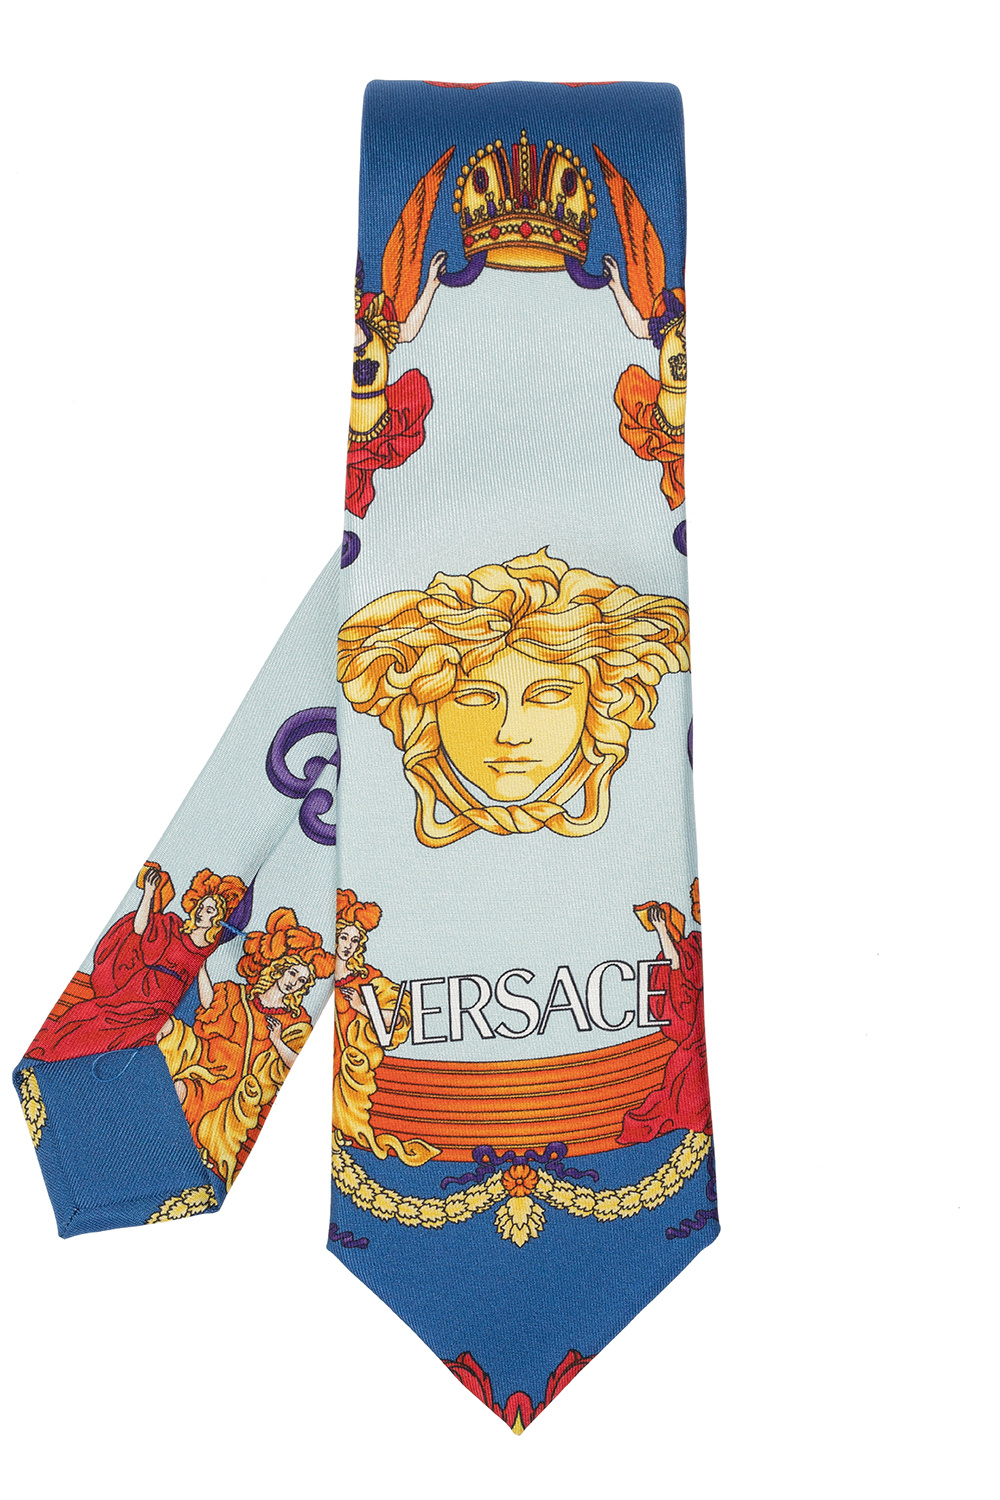 Versace Renaissance-printed tie